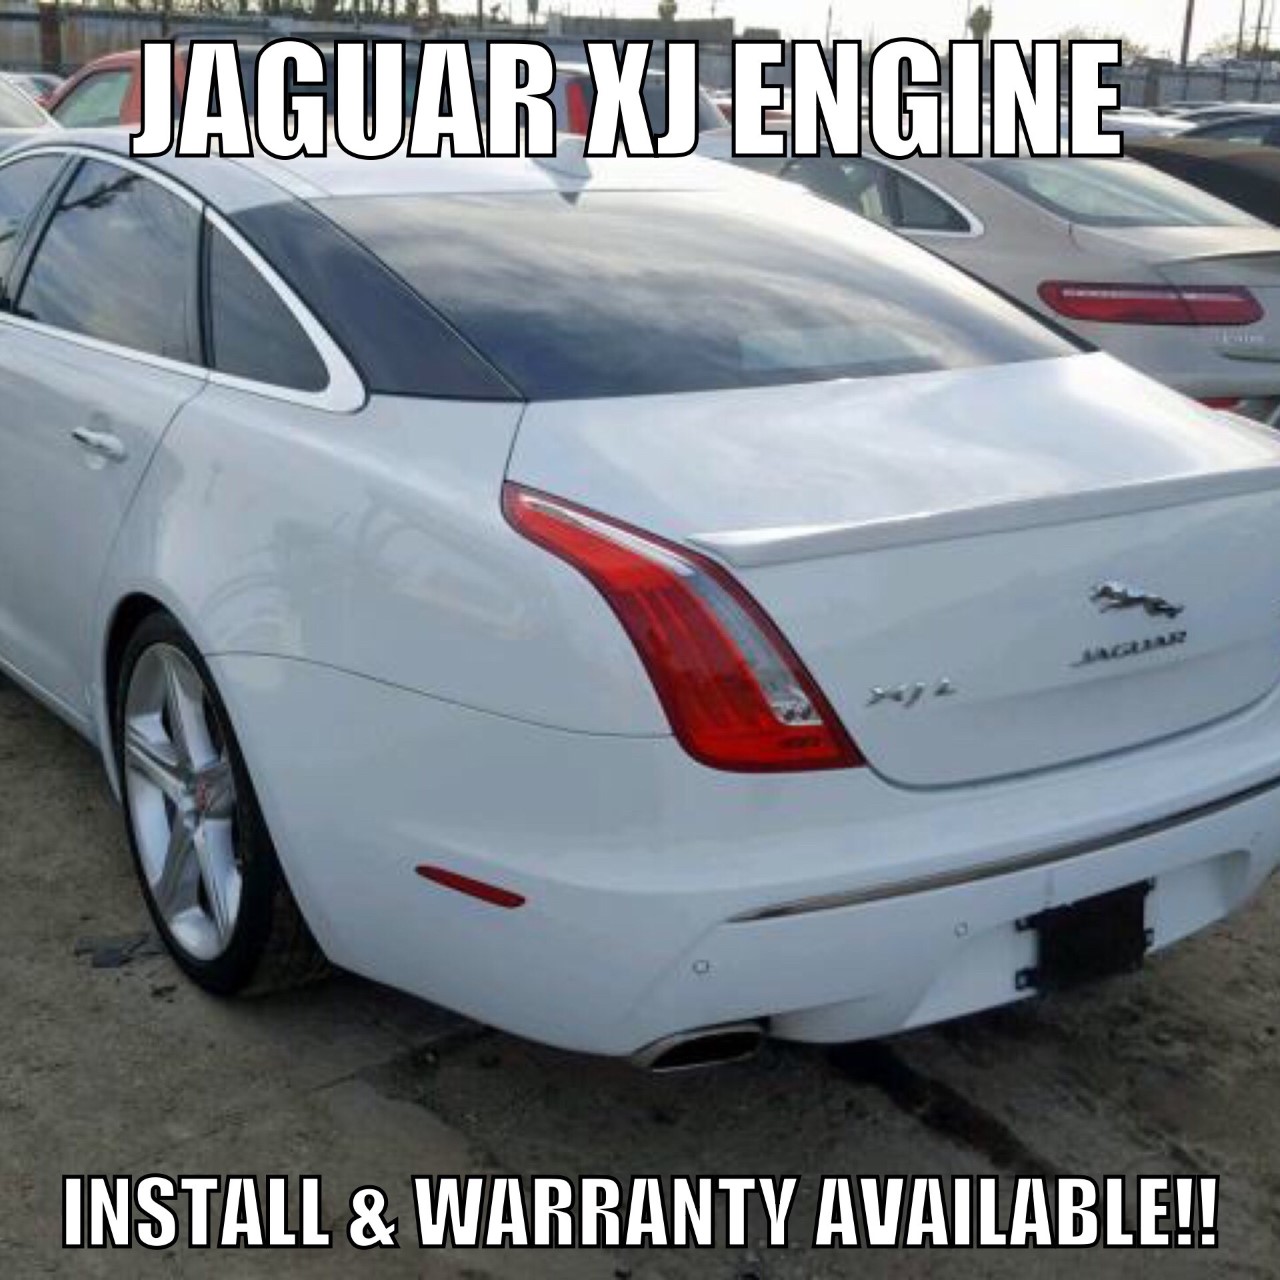 2013 Jaguar Xj 5.0 Supercharged engine